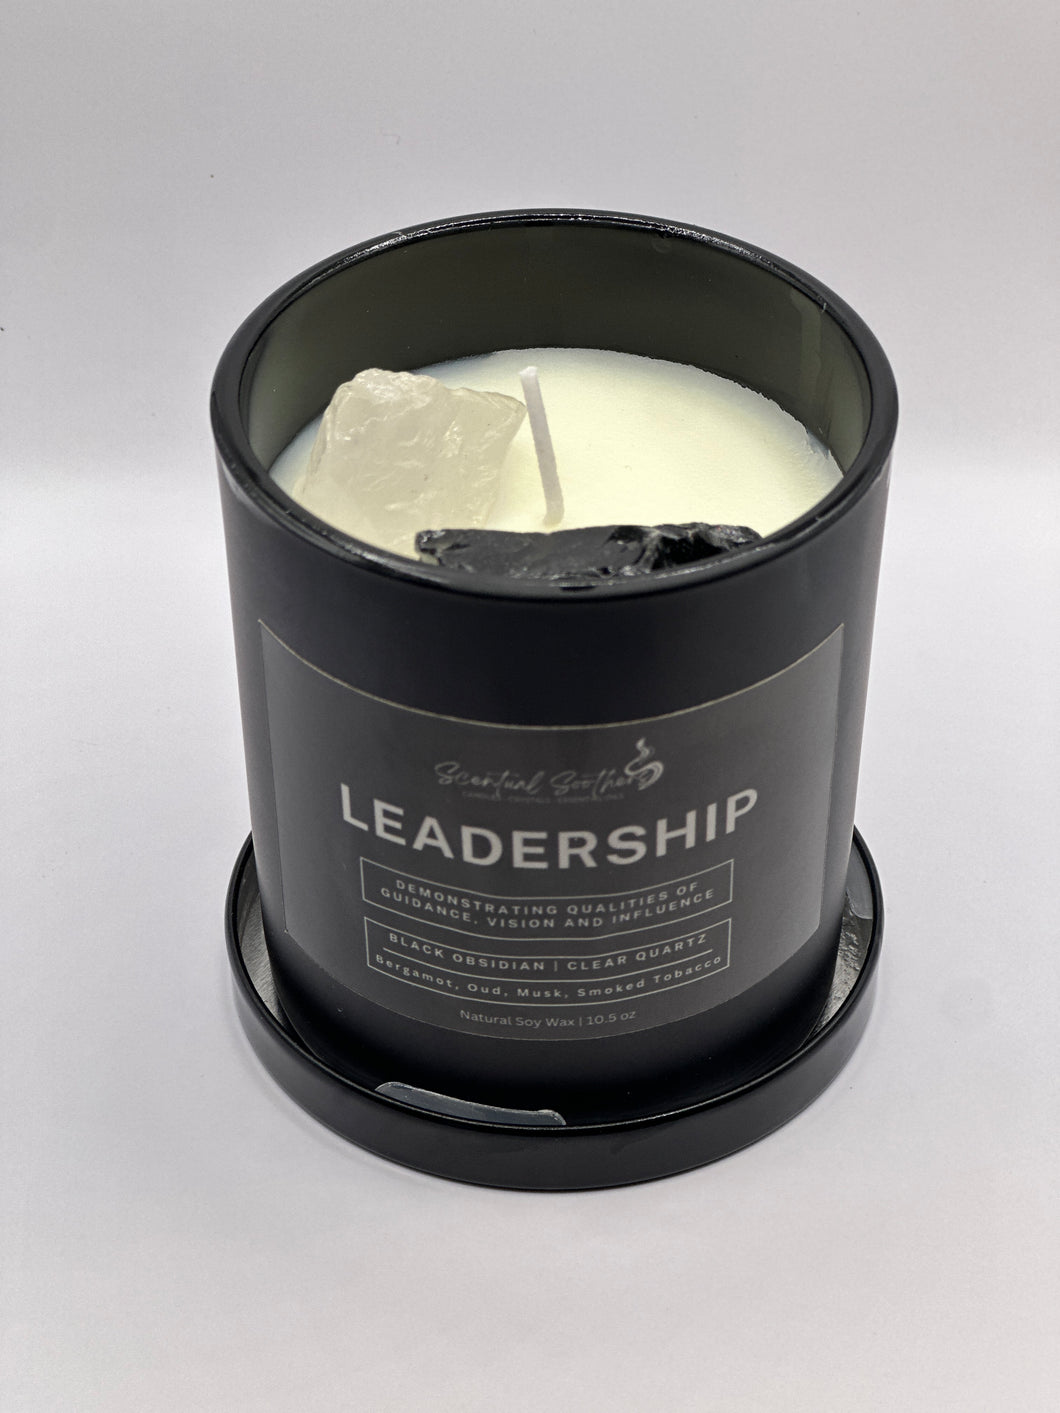 LEADERSHIP Candle